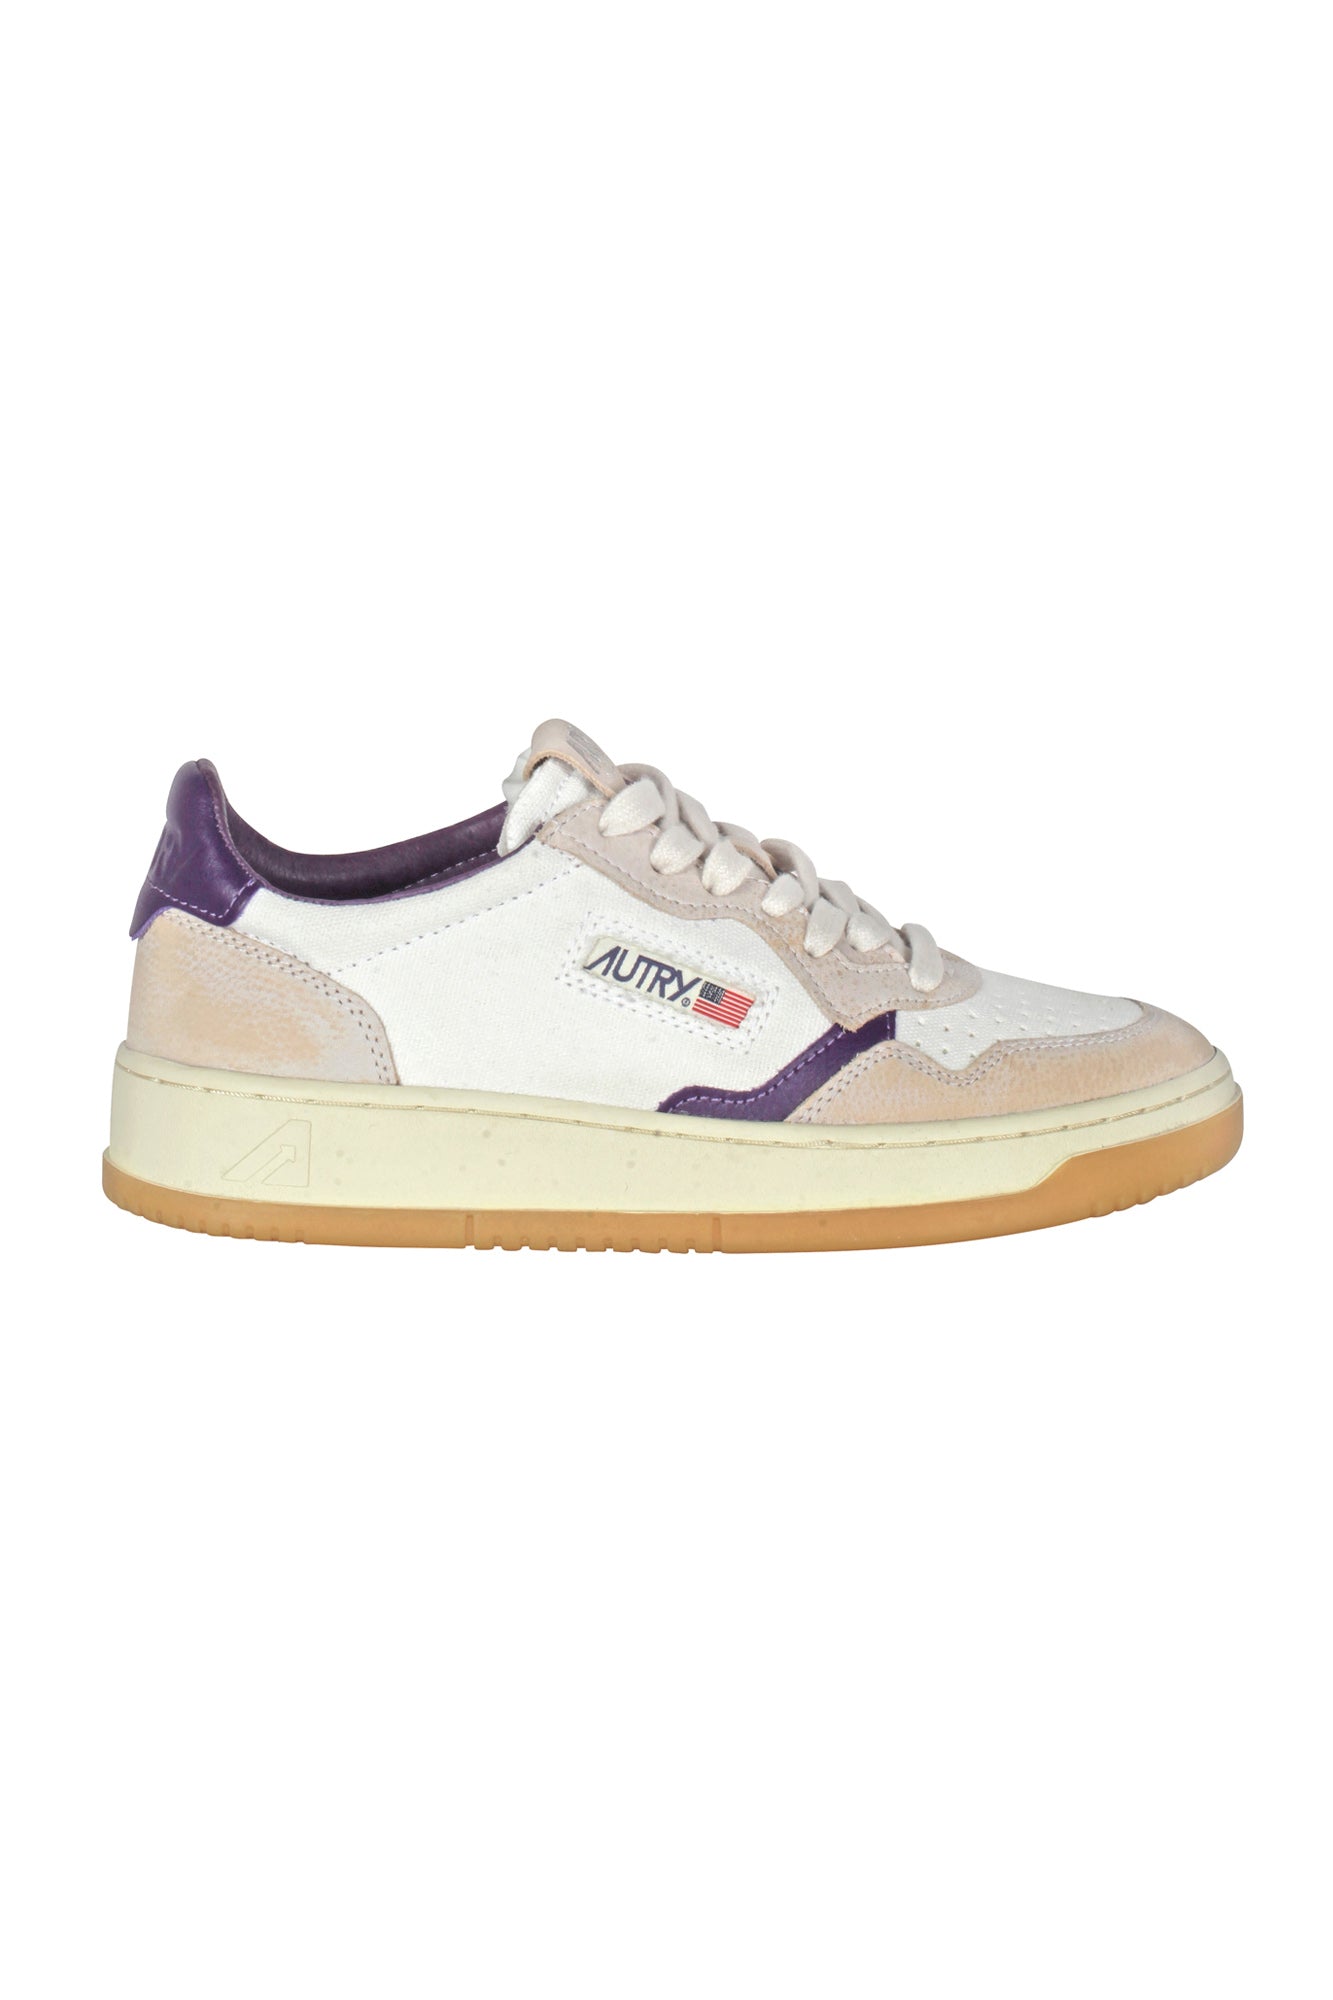 Autry - Sneakers - 430017 - Bianco/Viola